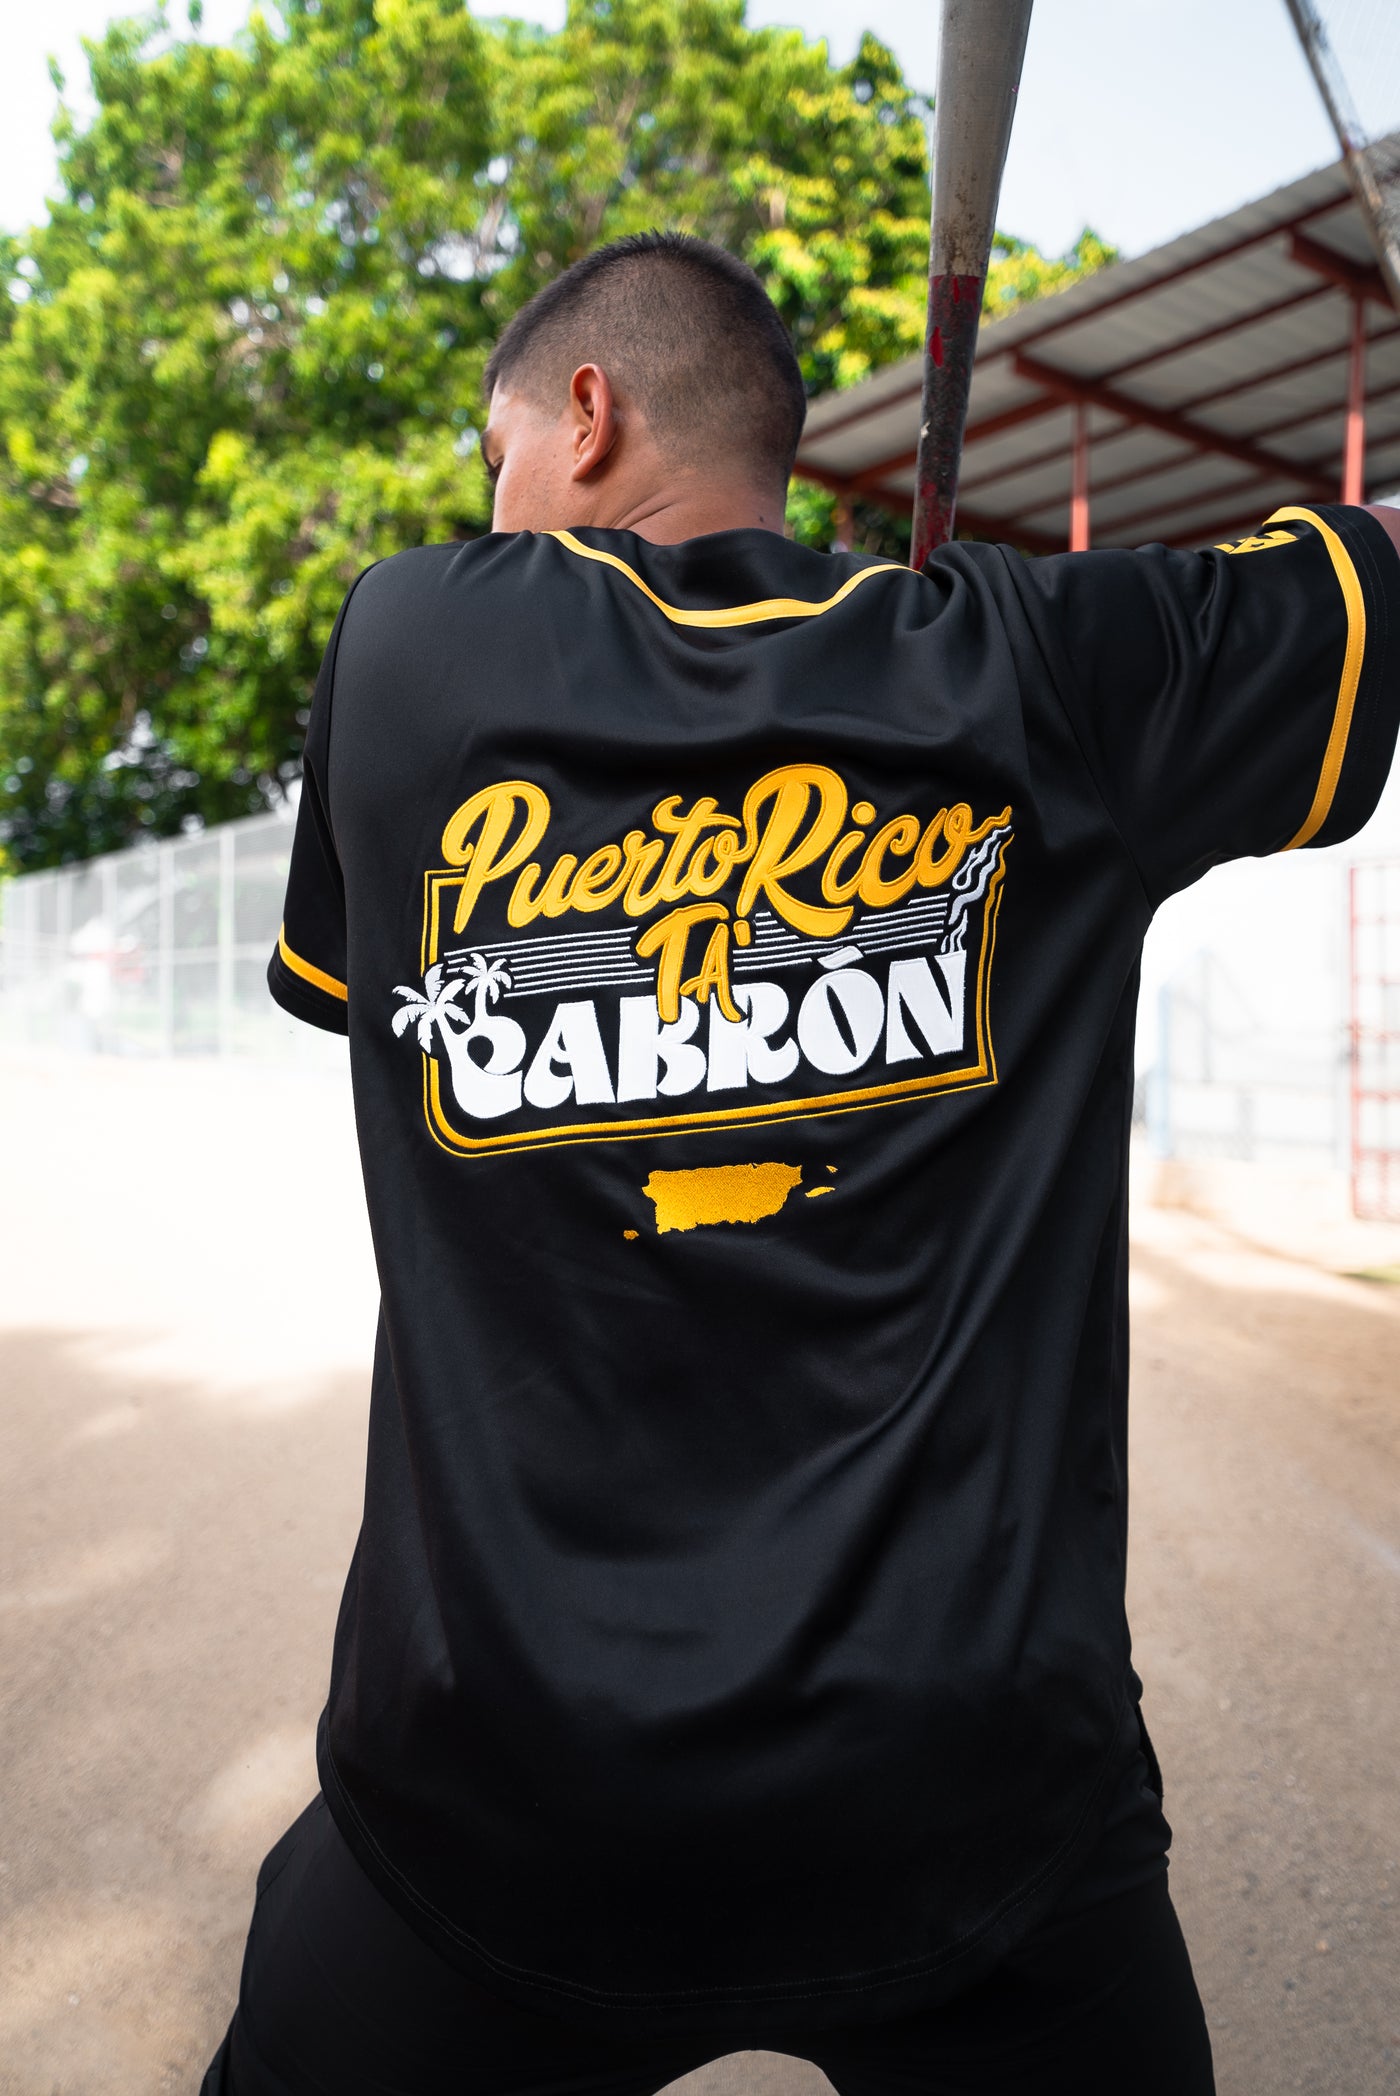 Puerto Rico Ta' Cabrn - Jersey